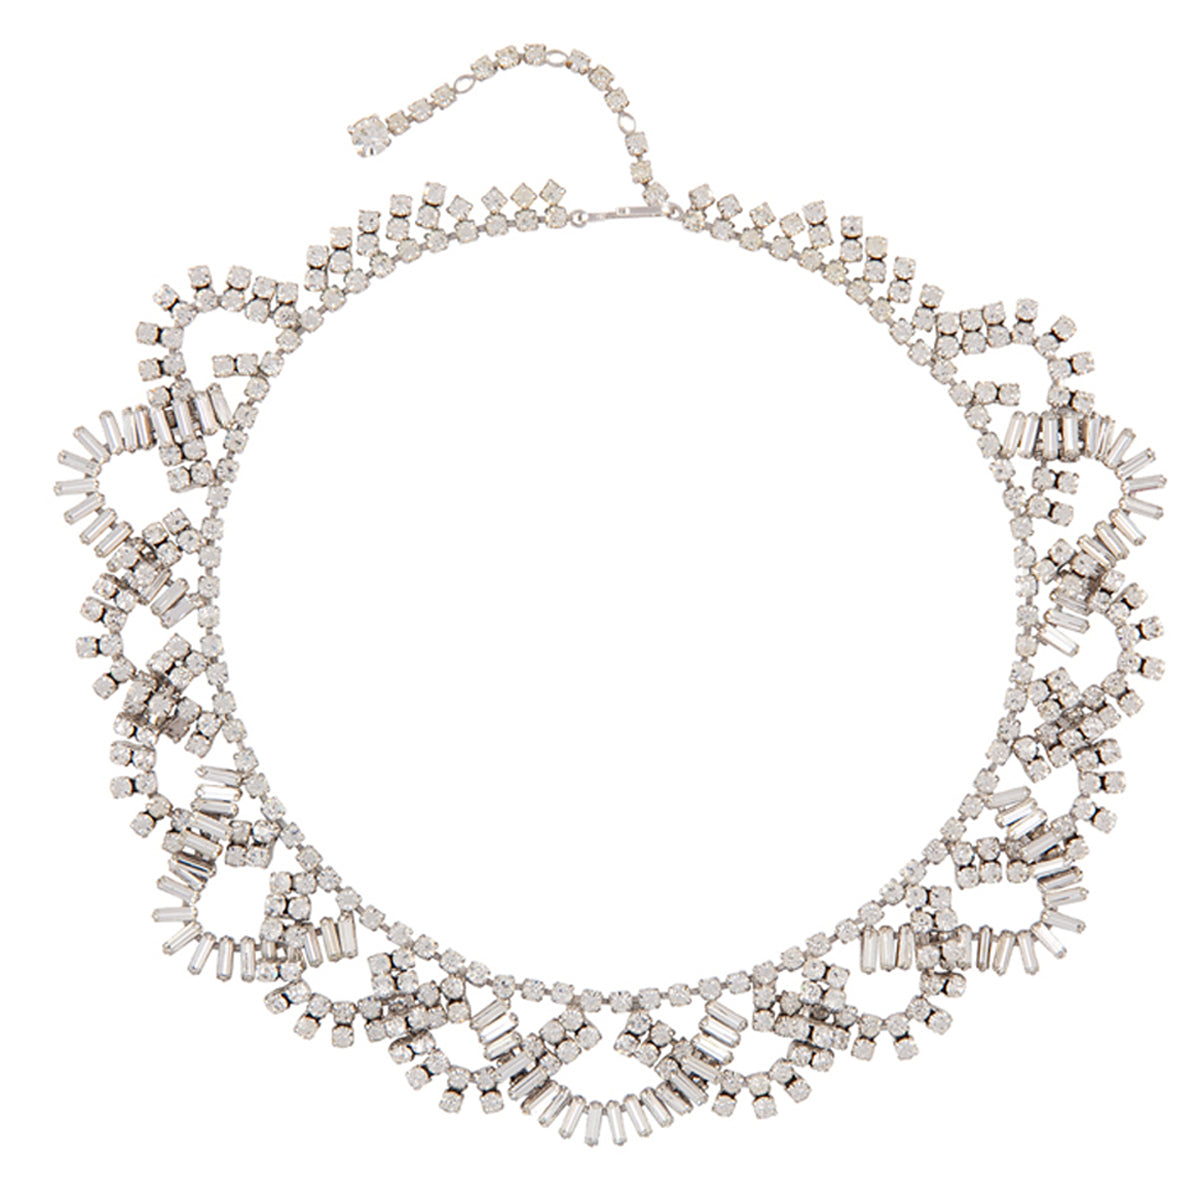 60s -70s Jewelry – Necklaces, Earrings, Rings, Bracelets VINTAGE 1960s  Edwardian Revival Regal Necklace £369.00 AT vintagedancer.com